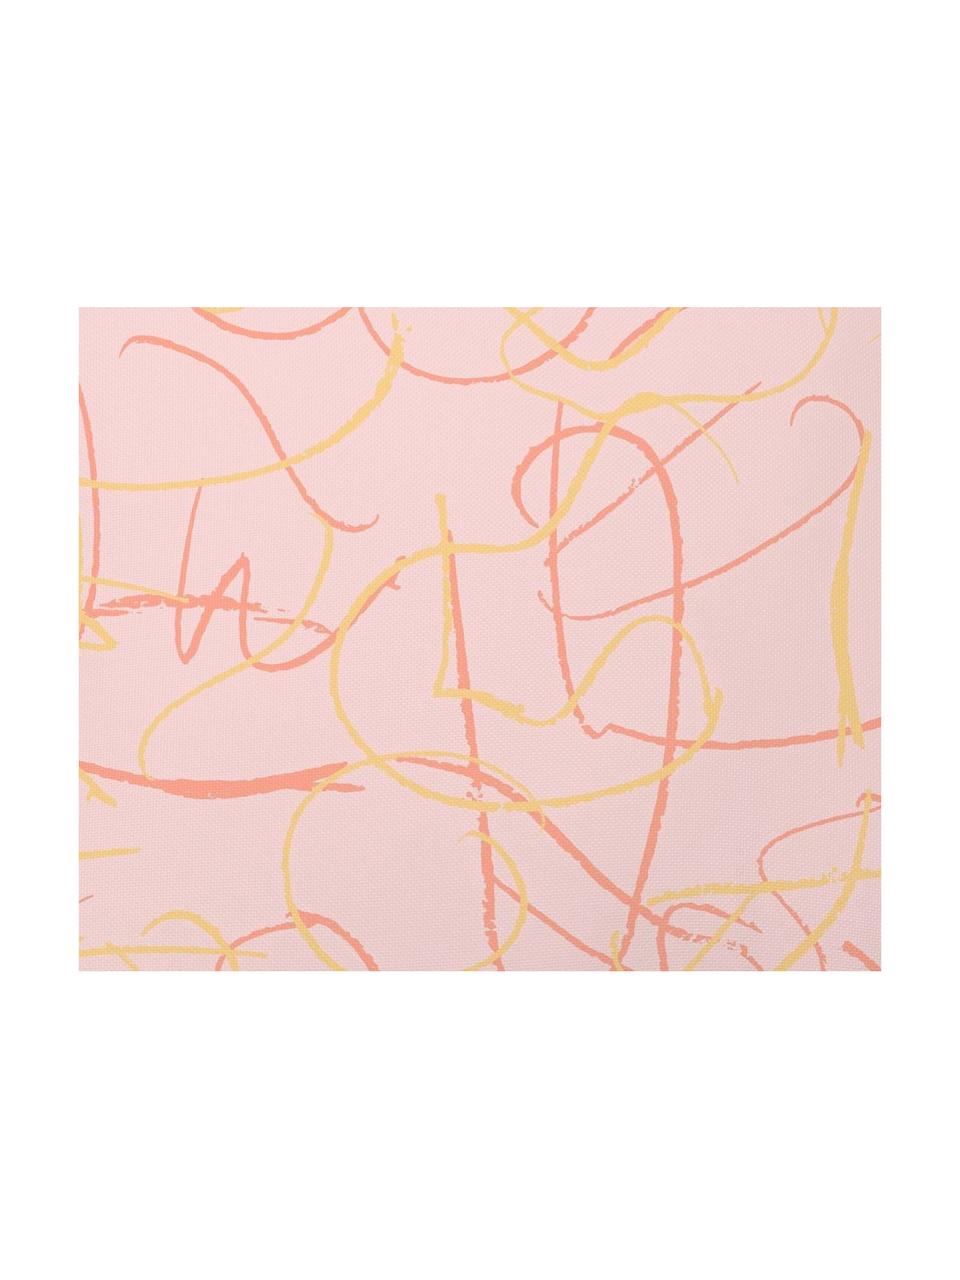 Kissenhülle Doodle mit abstraktem Muster in Rosa/Gelb, 100% Polyester, Rosa, Gelb, 40 x 40 cm